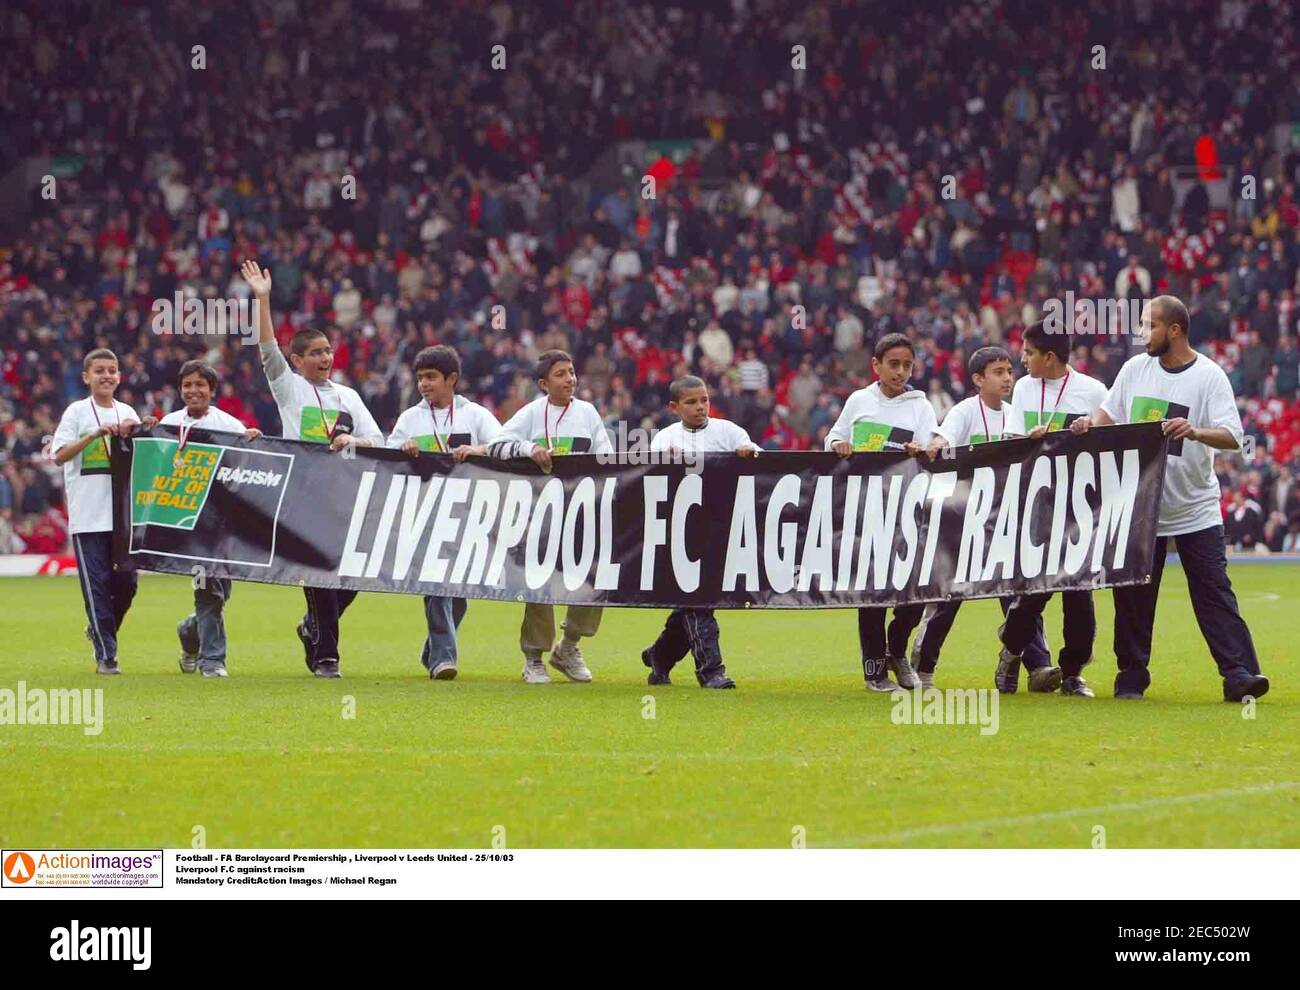 Fußball - FA Barclaycard Premiership , Liverpool V Leeds United - 25/10/03 Liverpool F.C Against Rassismus Pflichtangabe:Action Images / Michael Regan Stockfoto